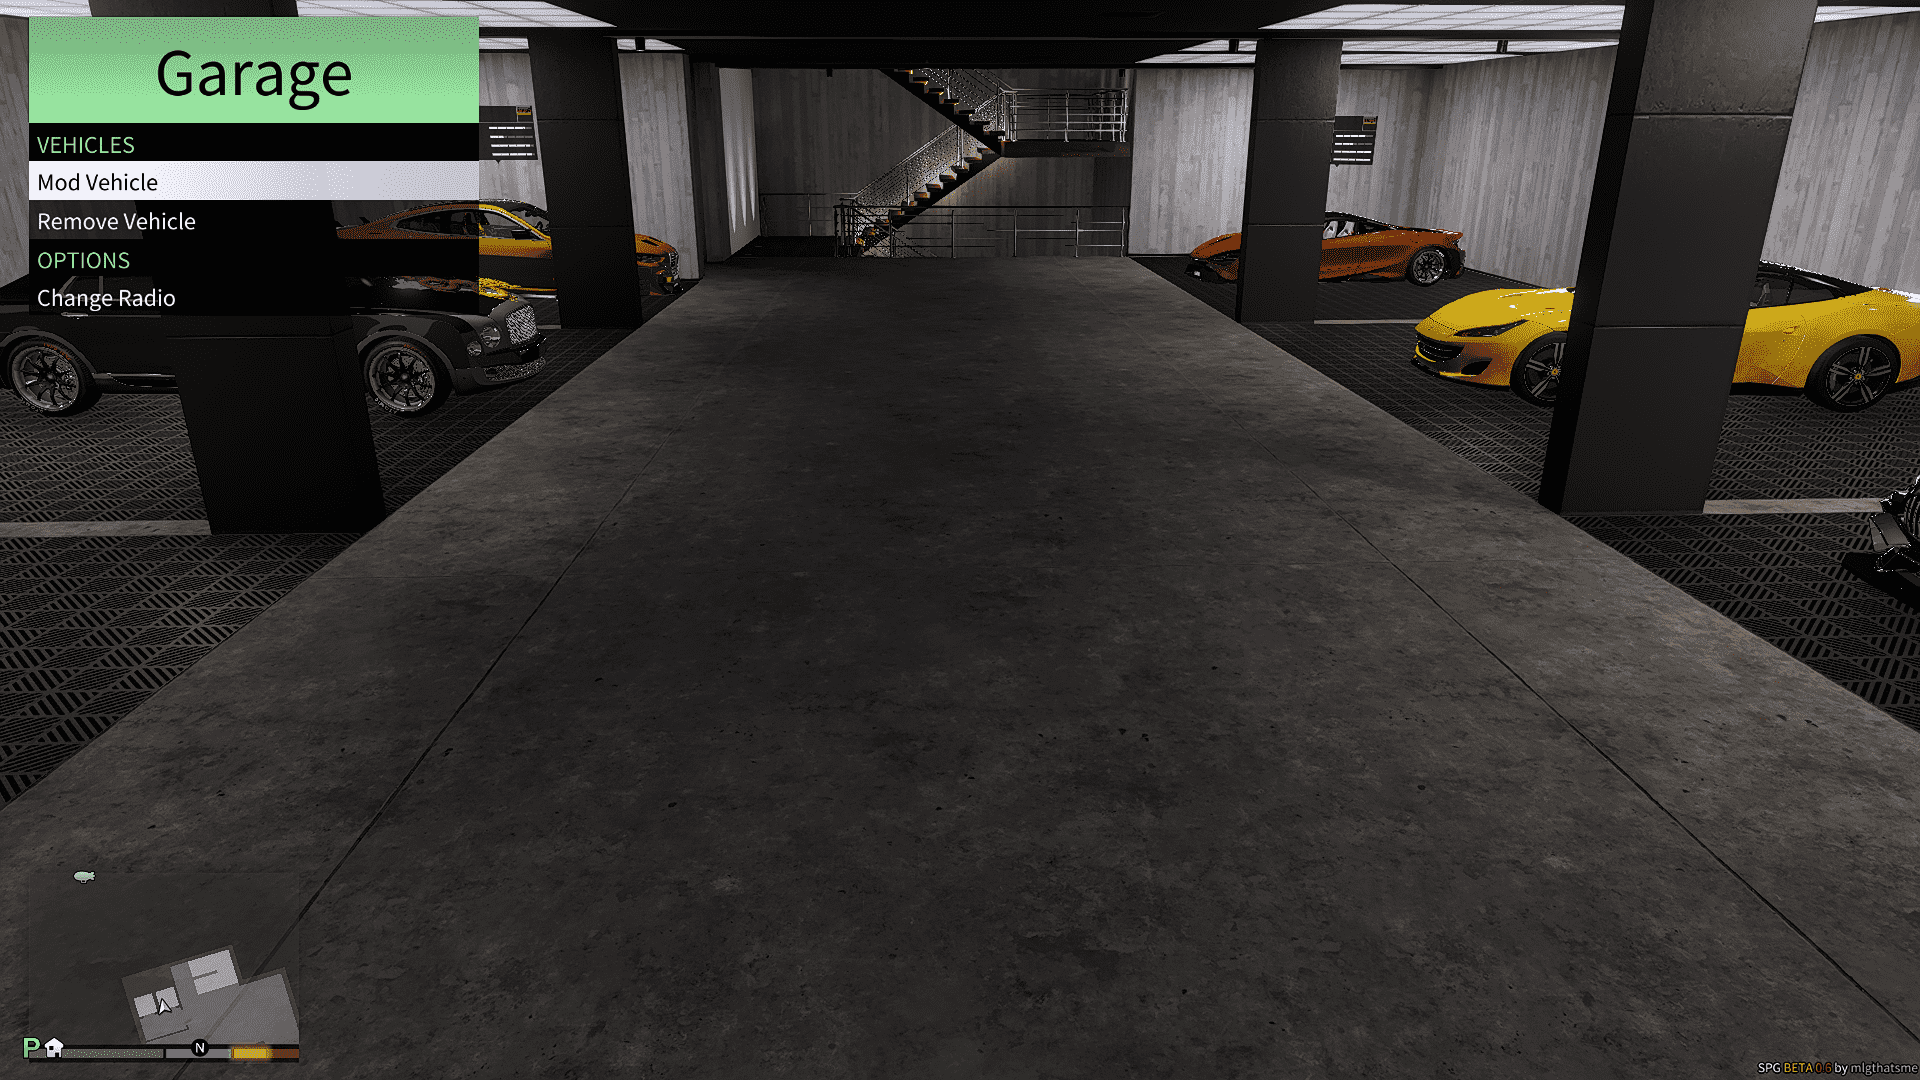 Agency Office Garage [SPG] for 60 Cars – GTA 5 mod